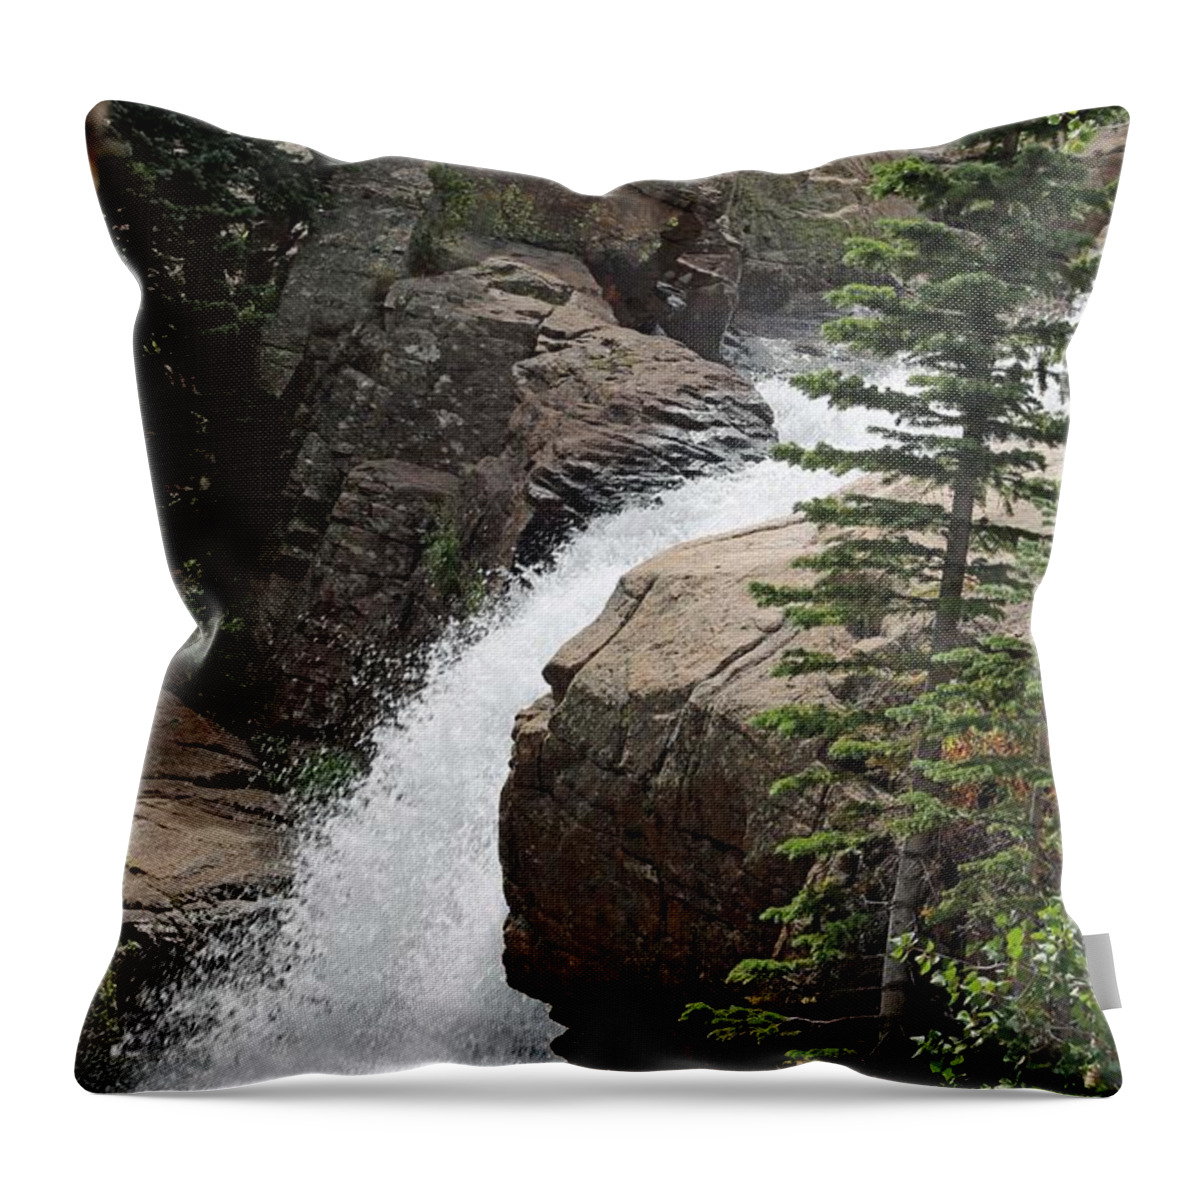 Alberta Falls Throw Pillow featuring the photograph Alberta Falls 03 by Pamela Critchlow